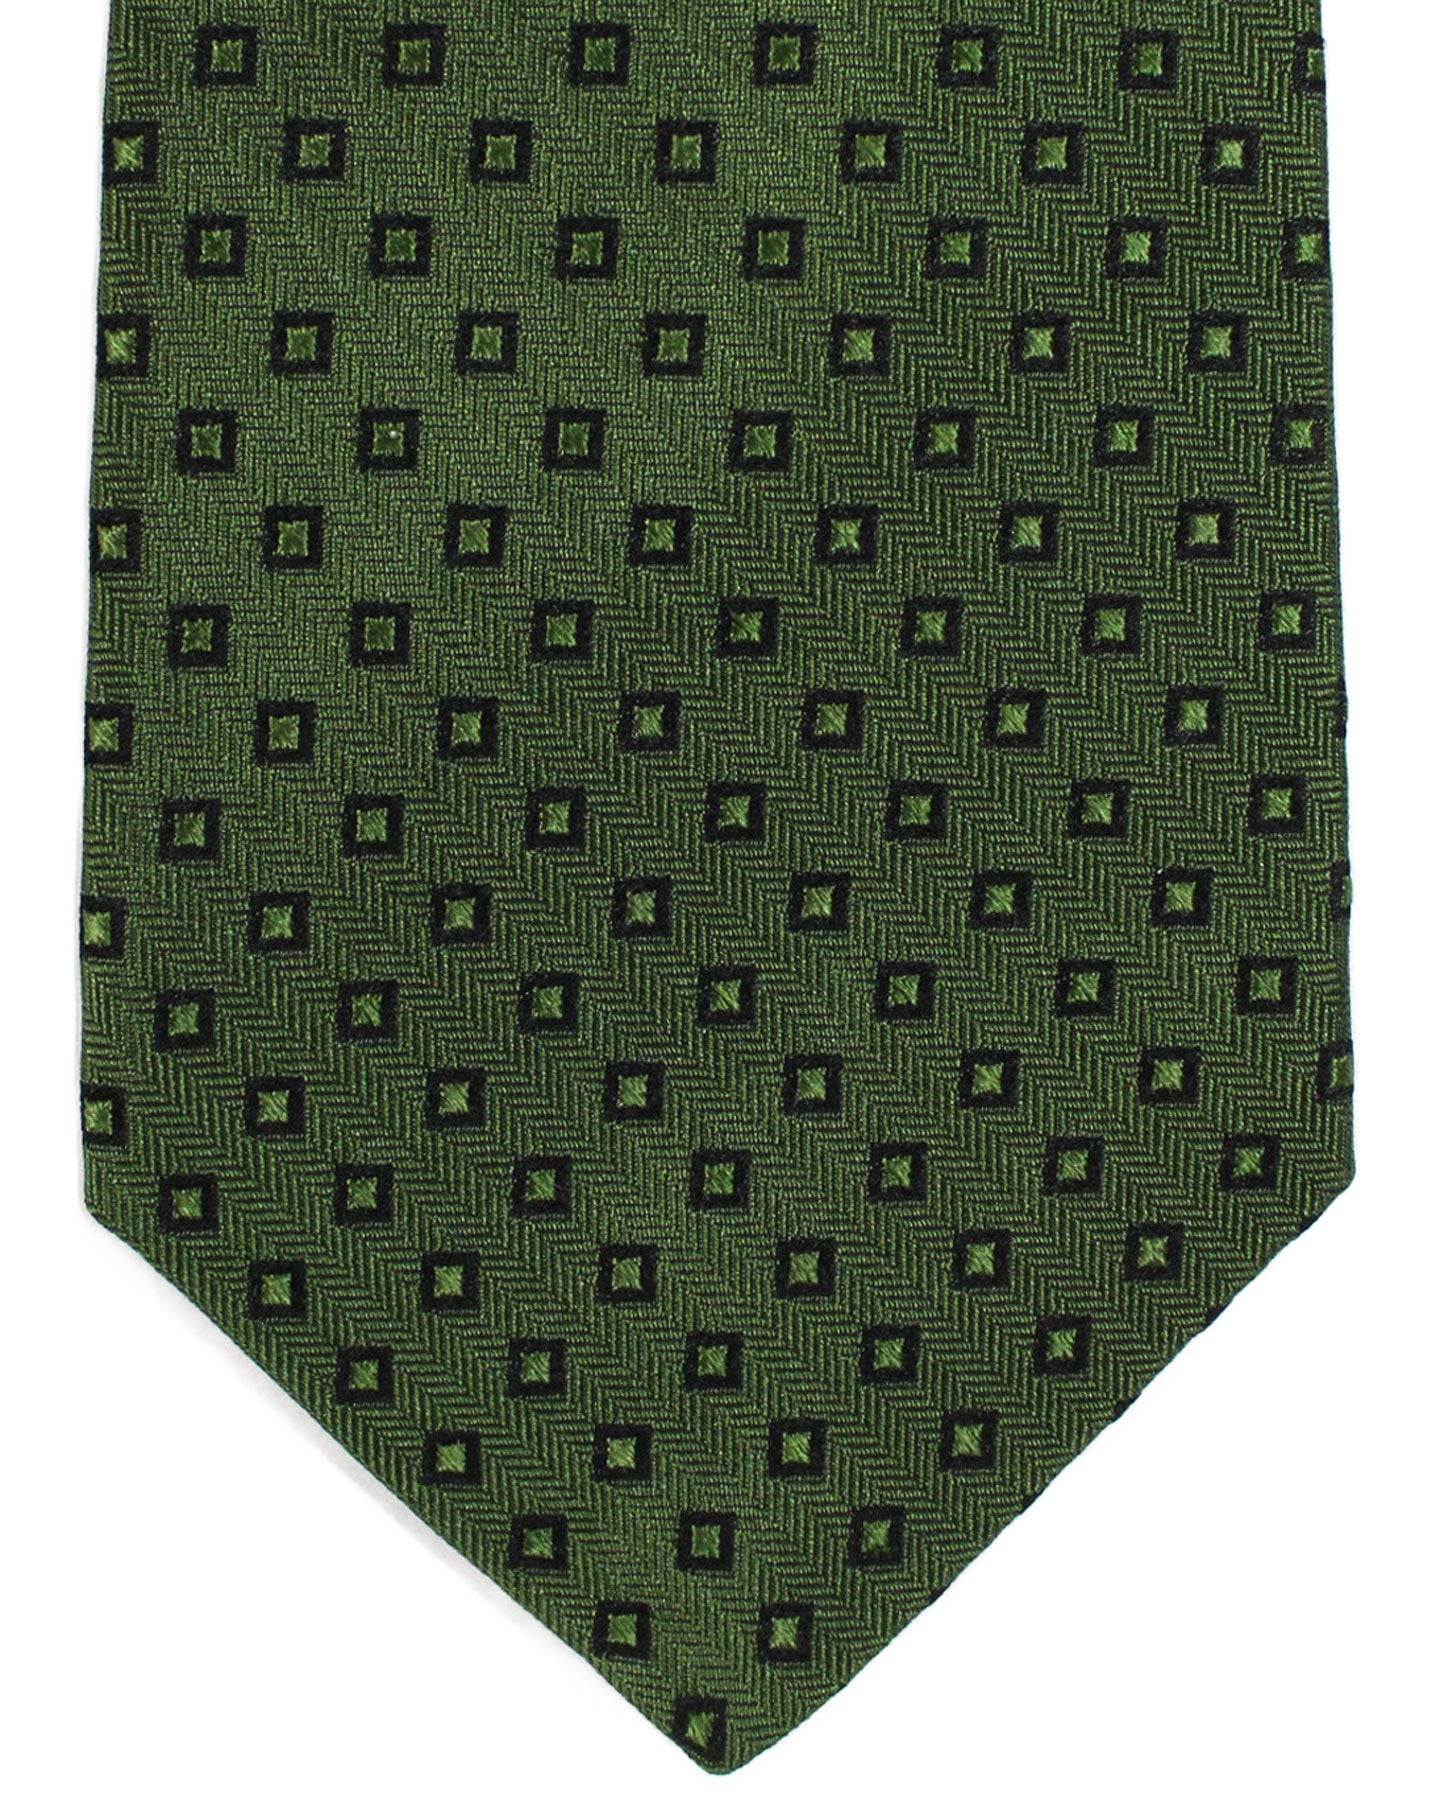 Sartorio Napoli Silk Tie Green Herringbone Squares Design